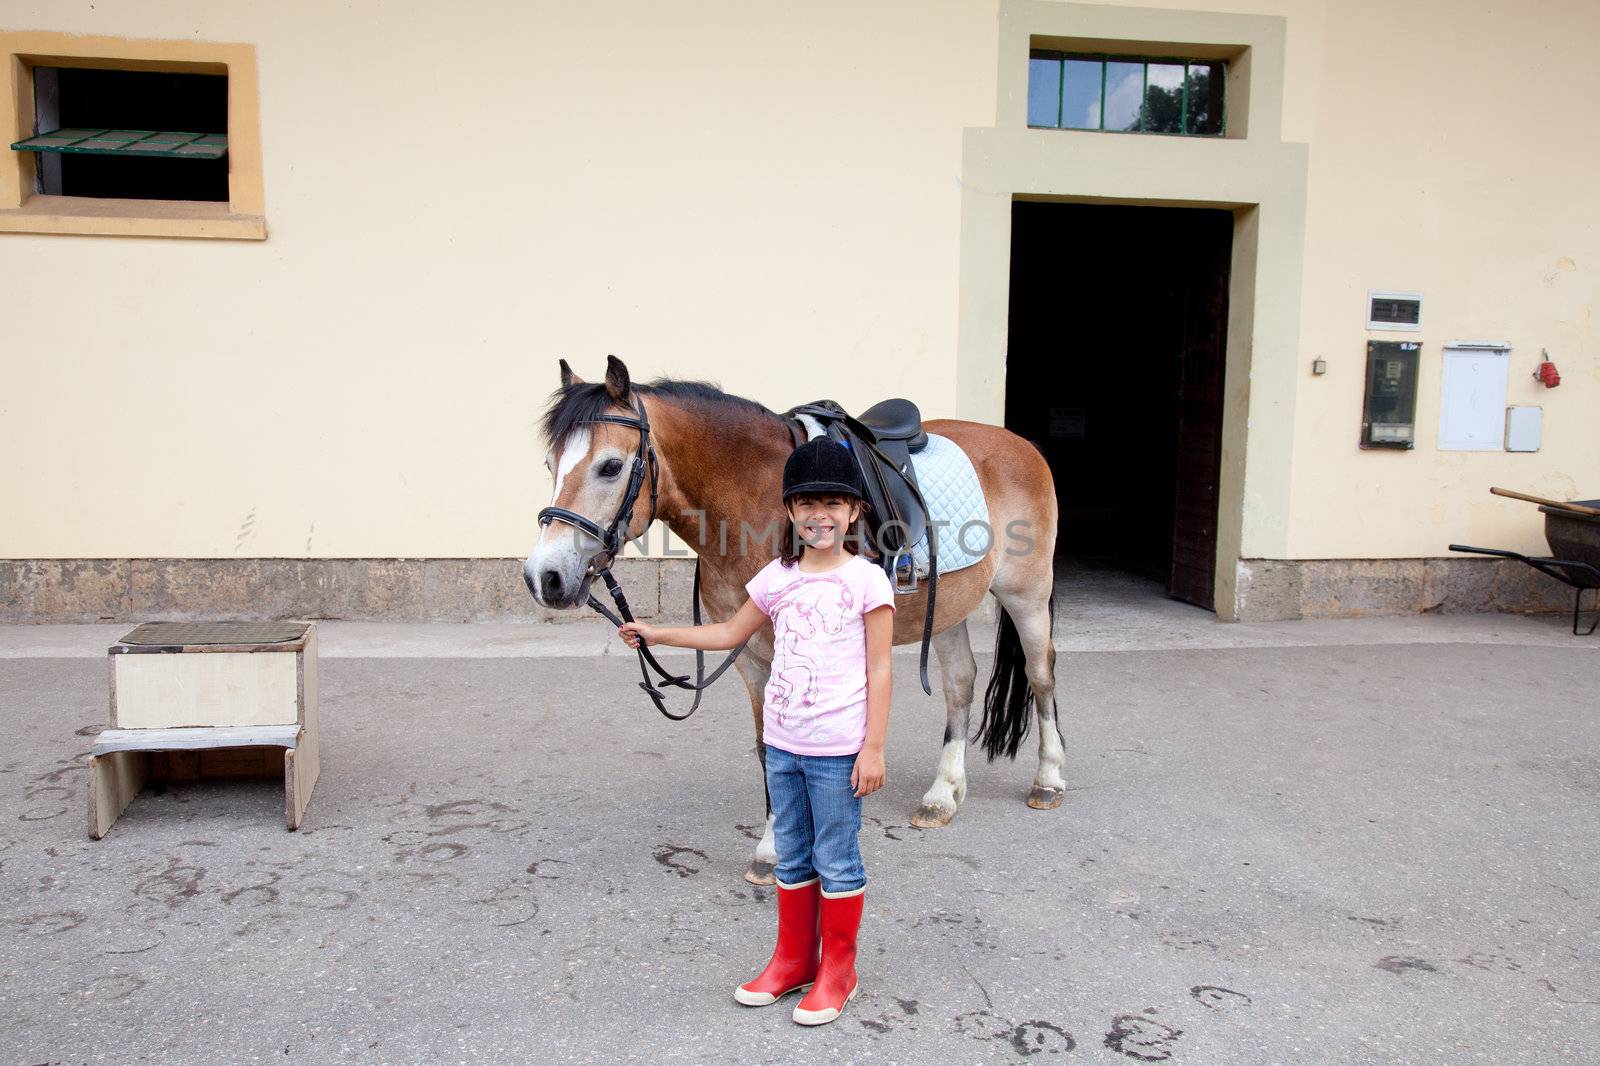 Little girl ready for a horseback riding lesson by DashaRosato